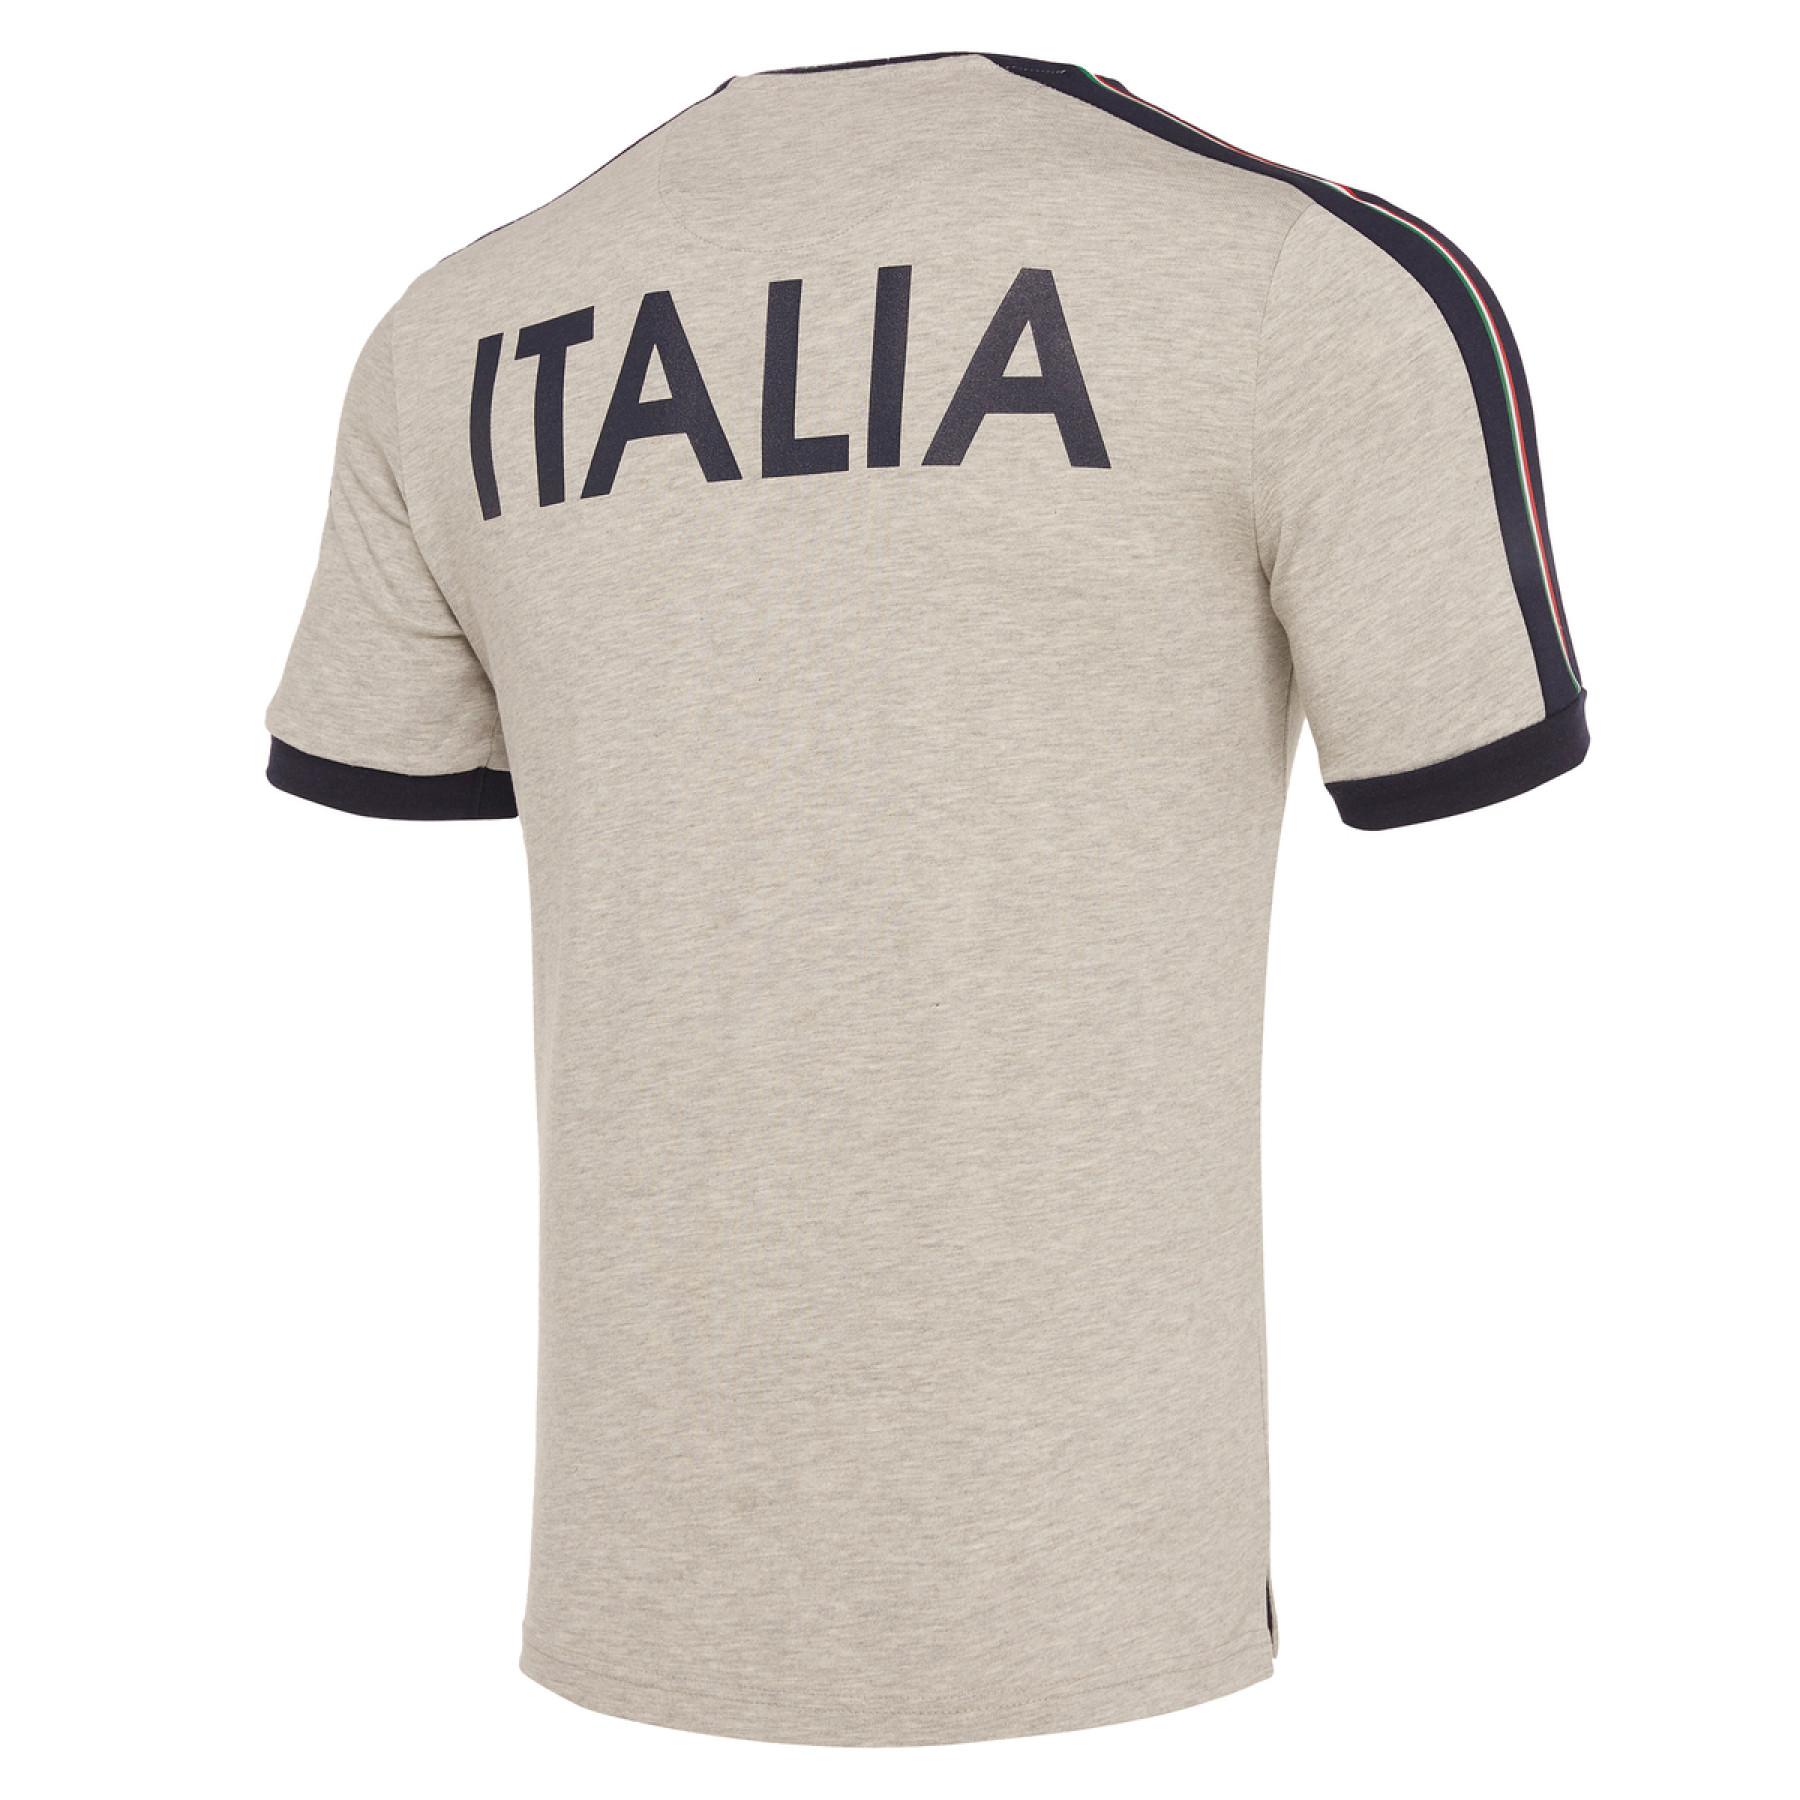 T-shirt i bomull Italie rubgy 2019